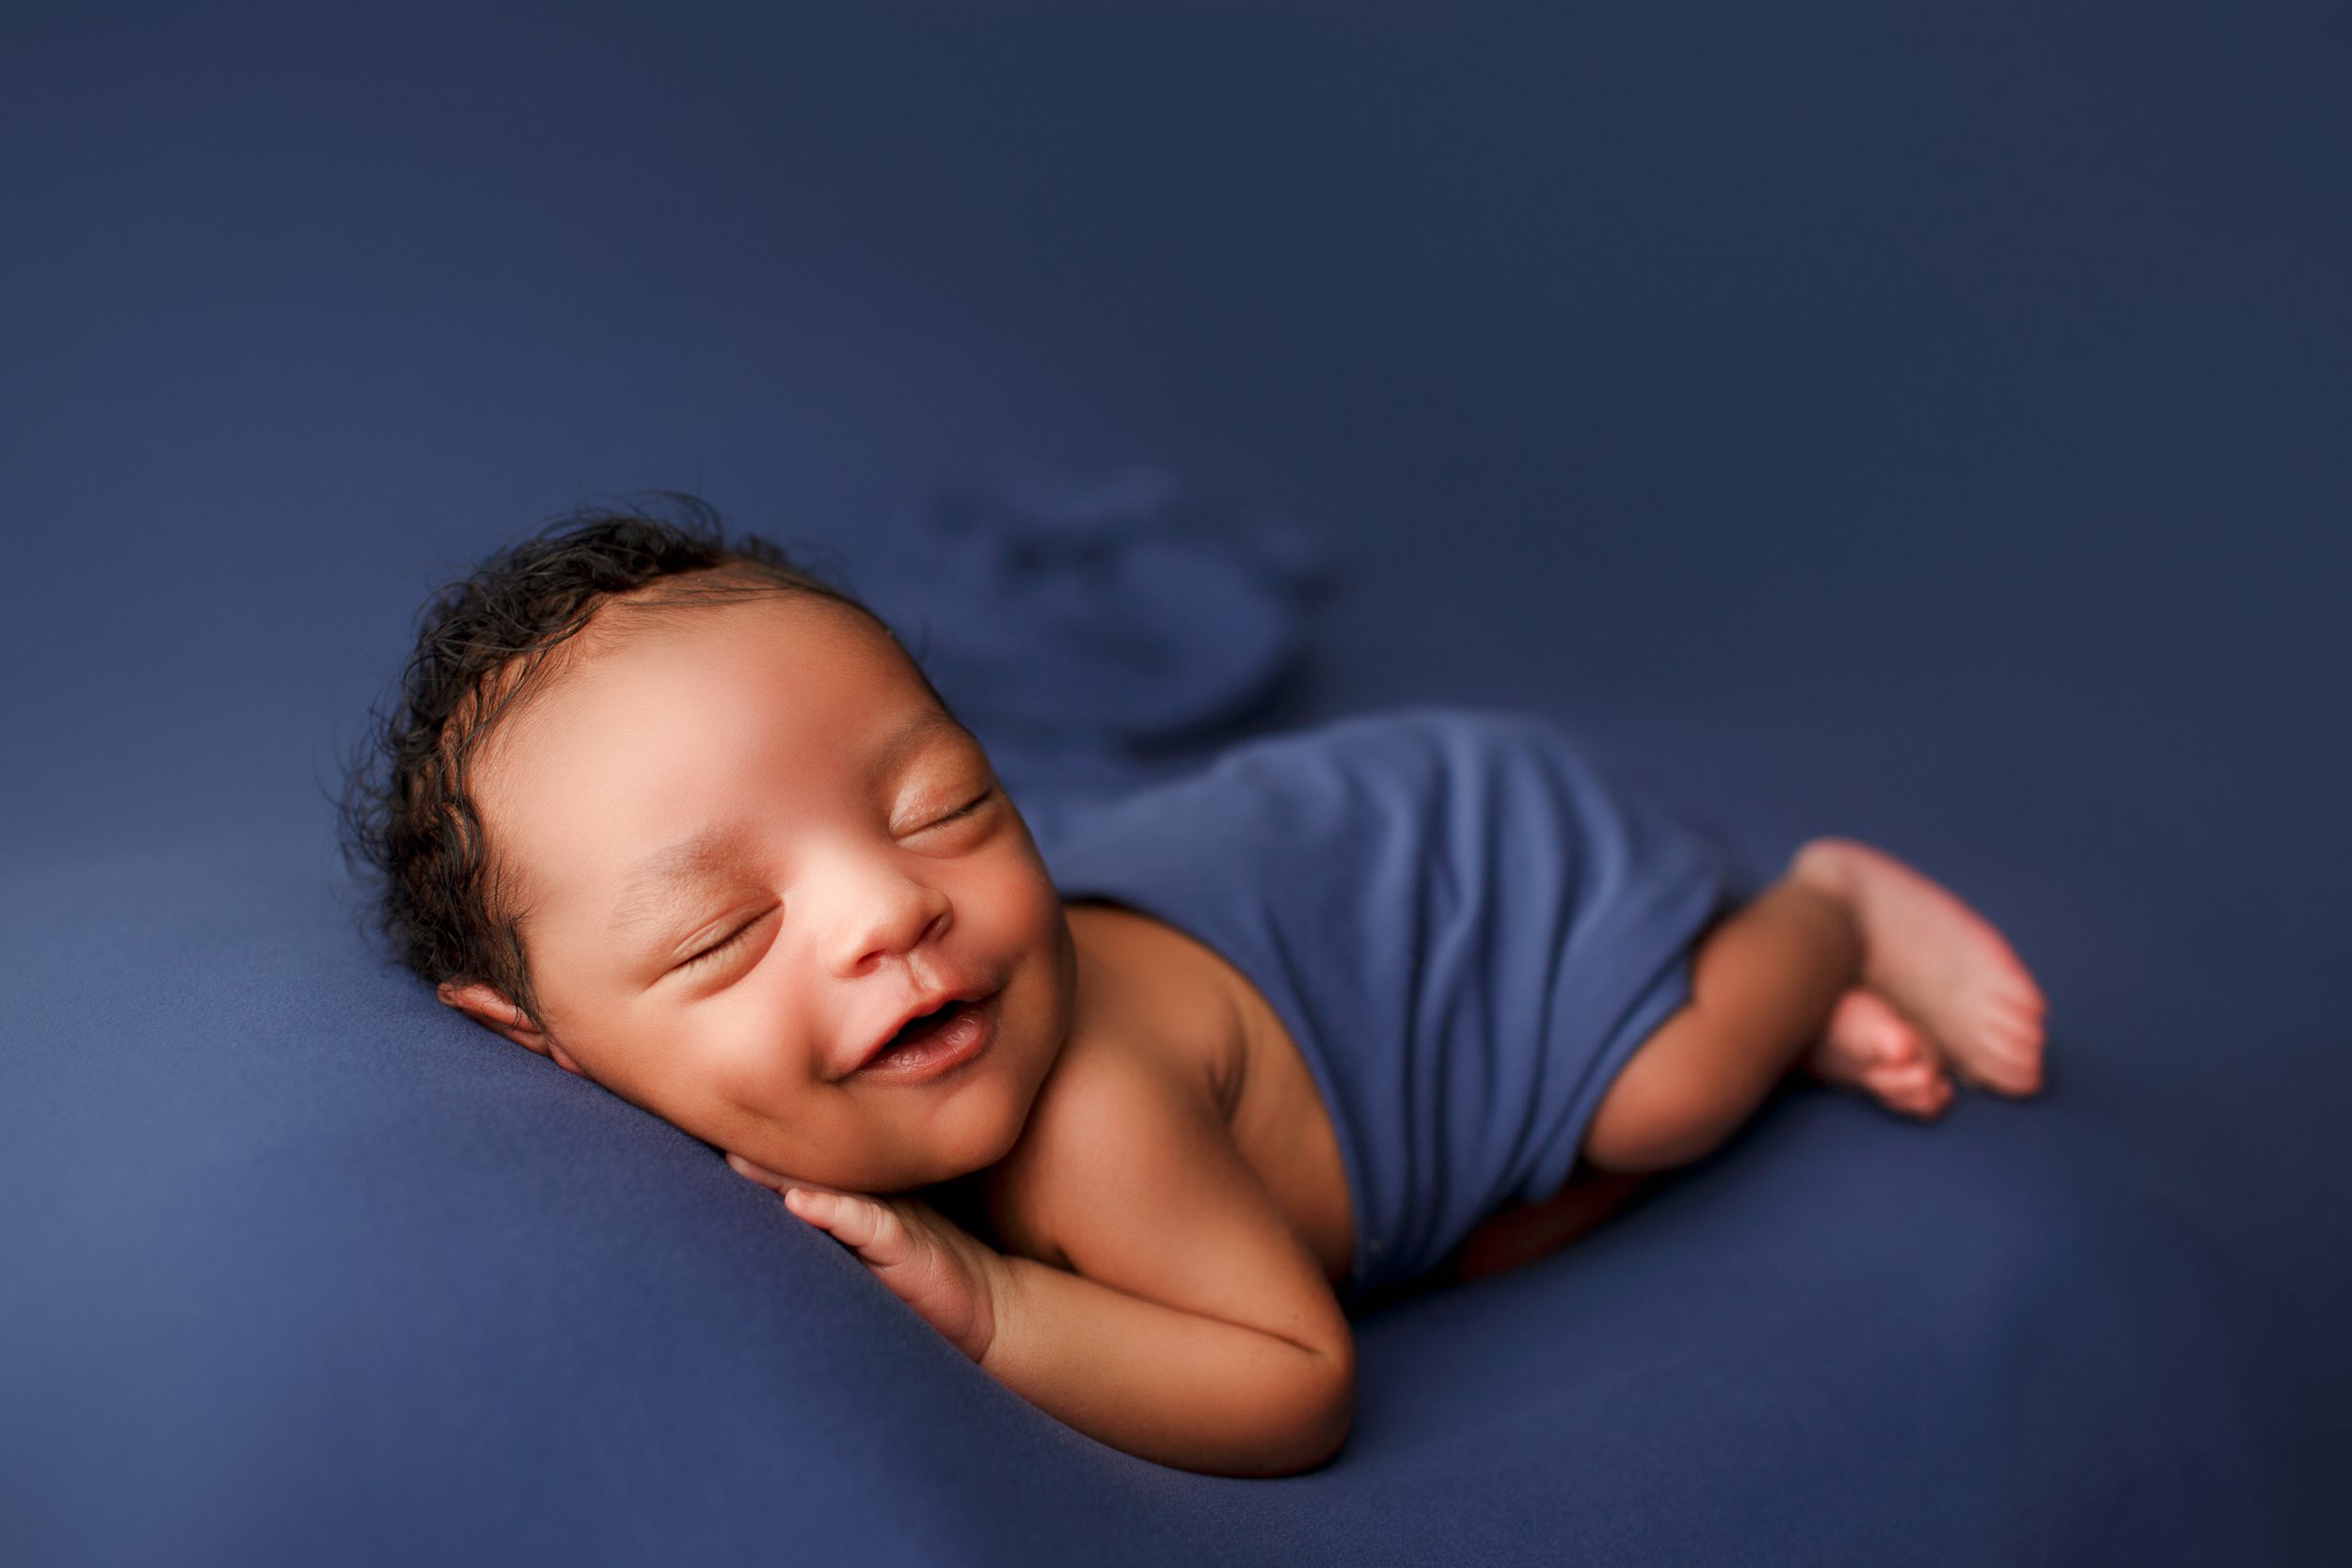  Smiling baby in blue blanket  